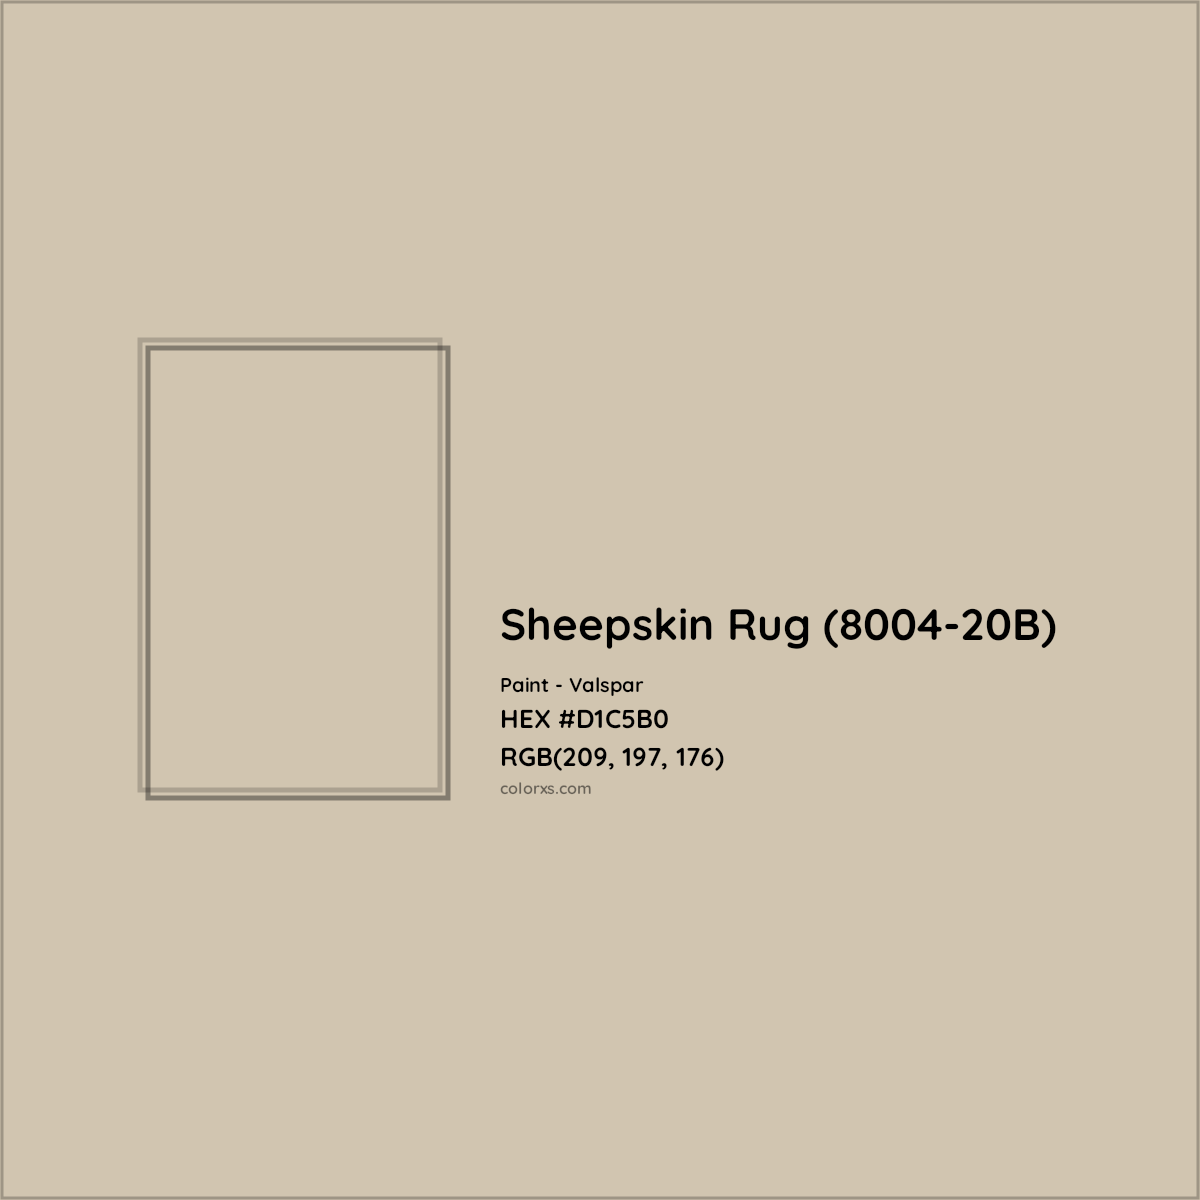 HEX #D1C5B0 Sheepskin Rug (8004-20B) Paint Valspar - Color Code